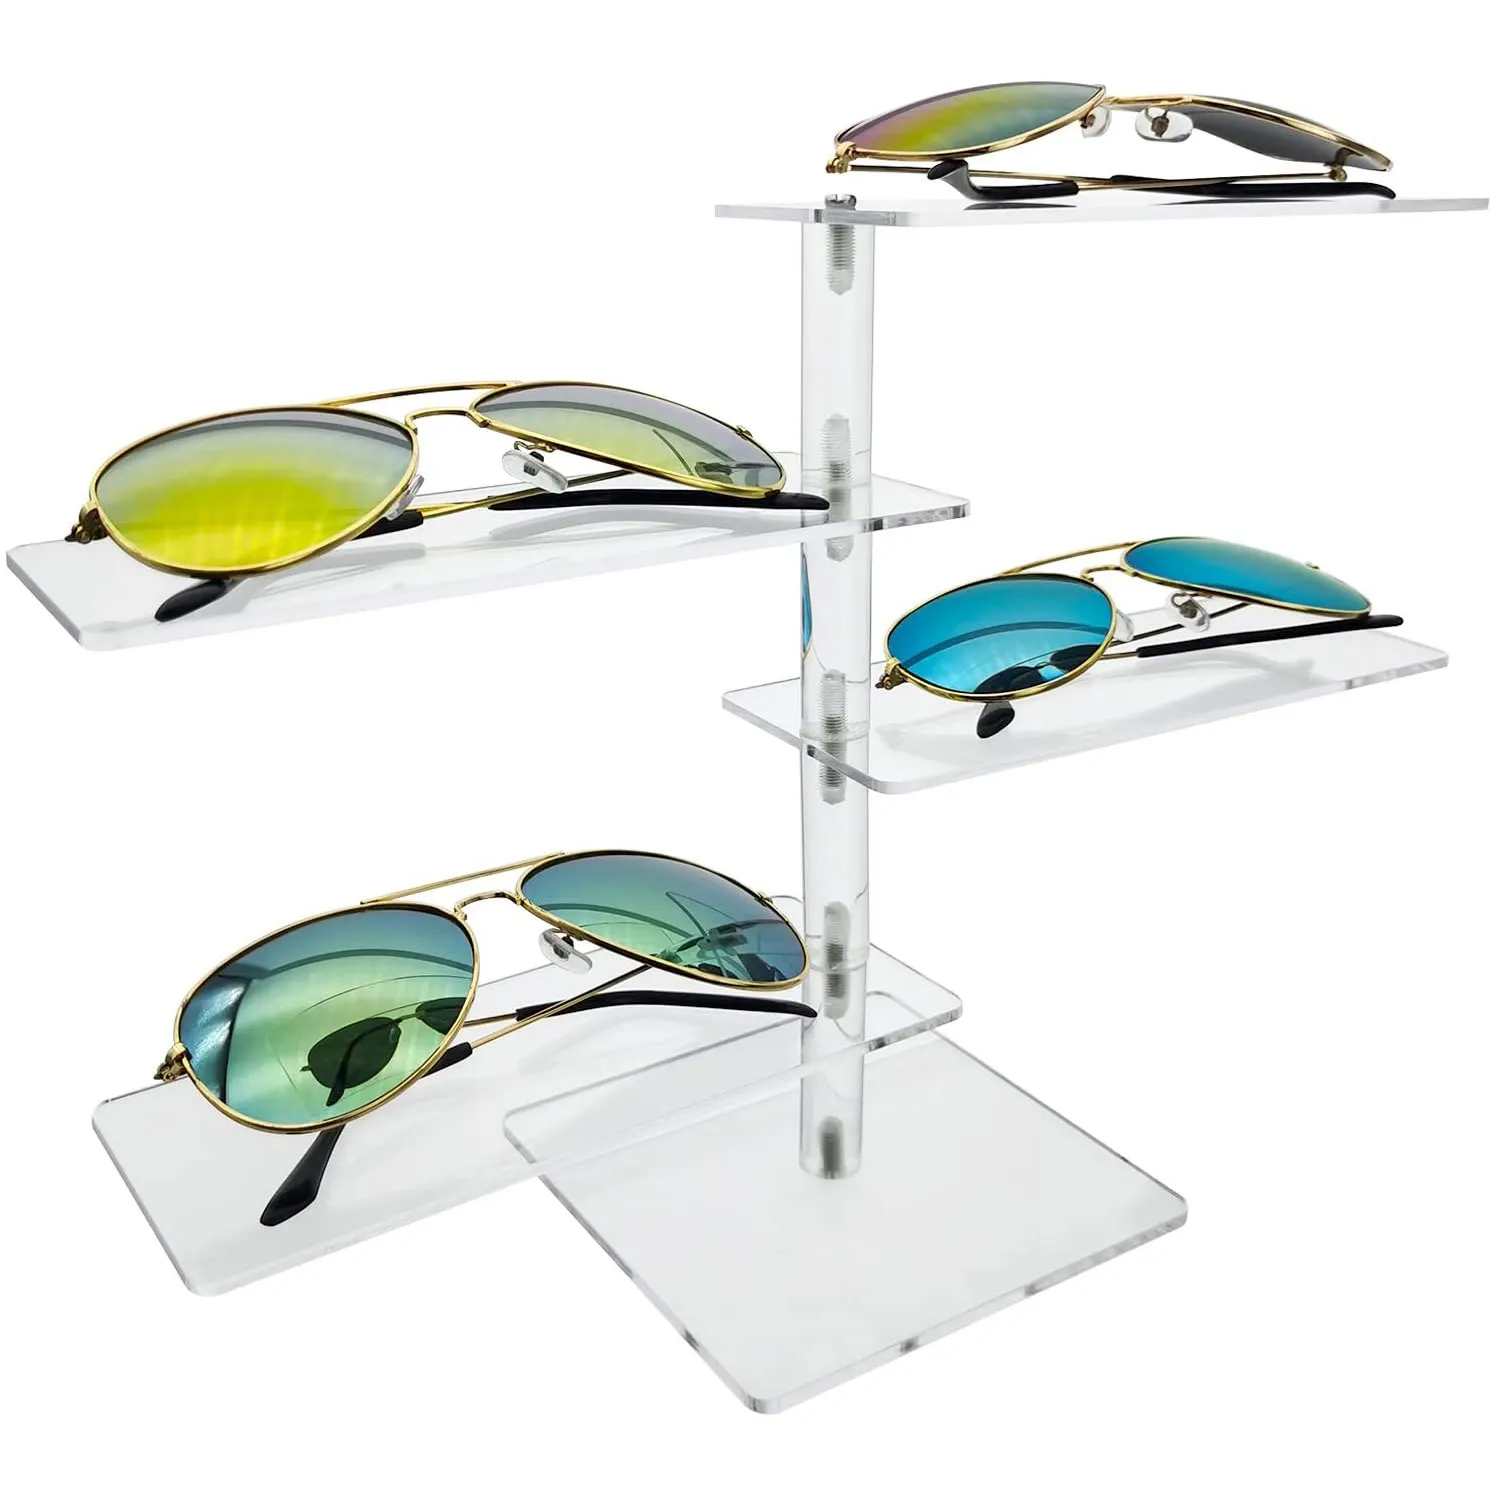 Clsaay prateleira de acrílico para óculos, suporte de 4 camadas para óculos de sol, expositor, joia para mesa